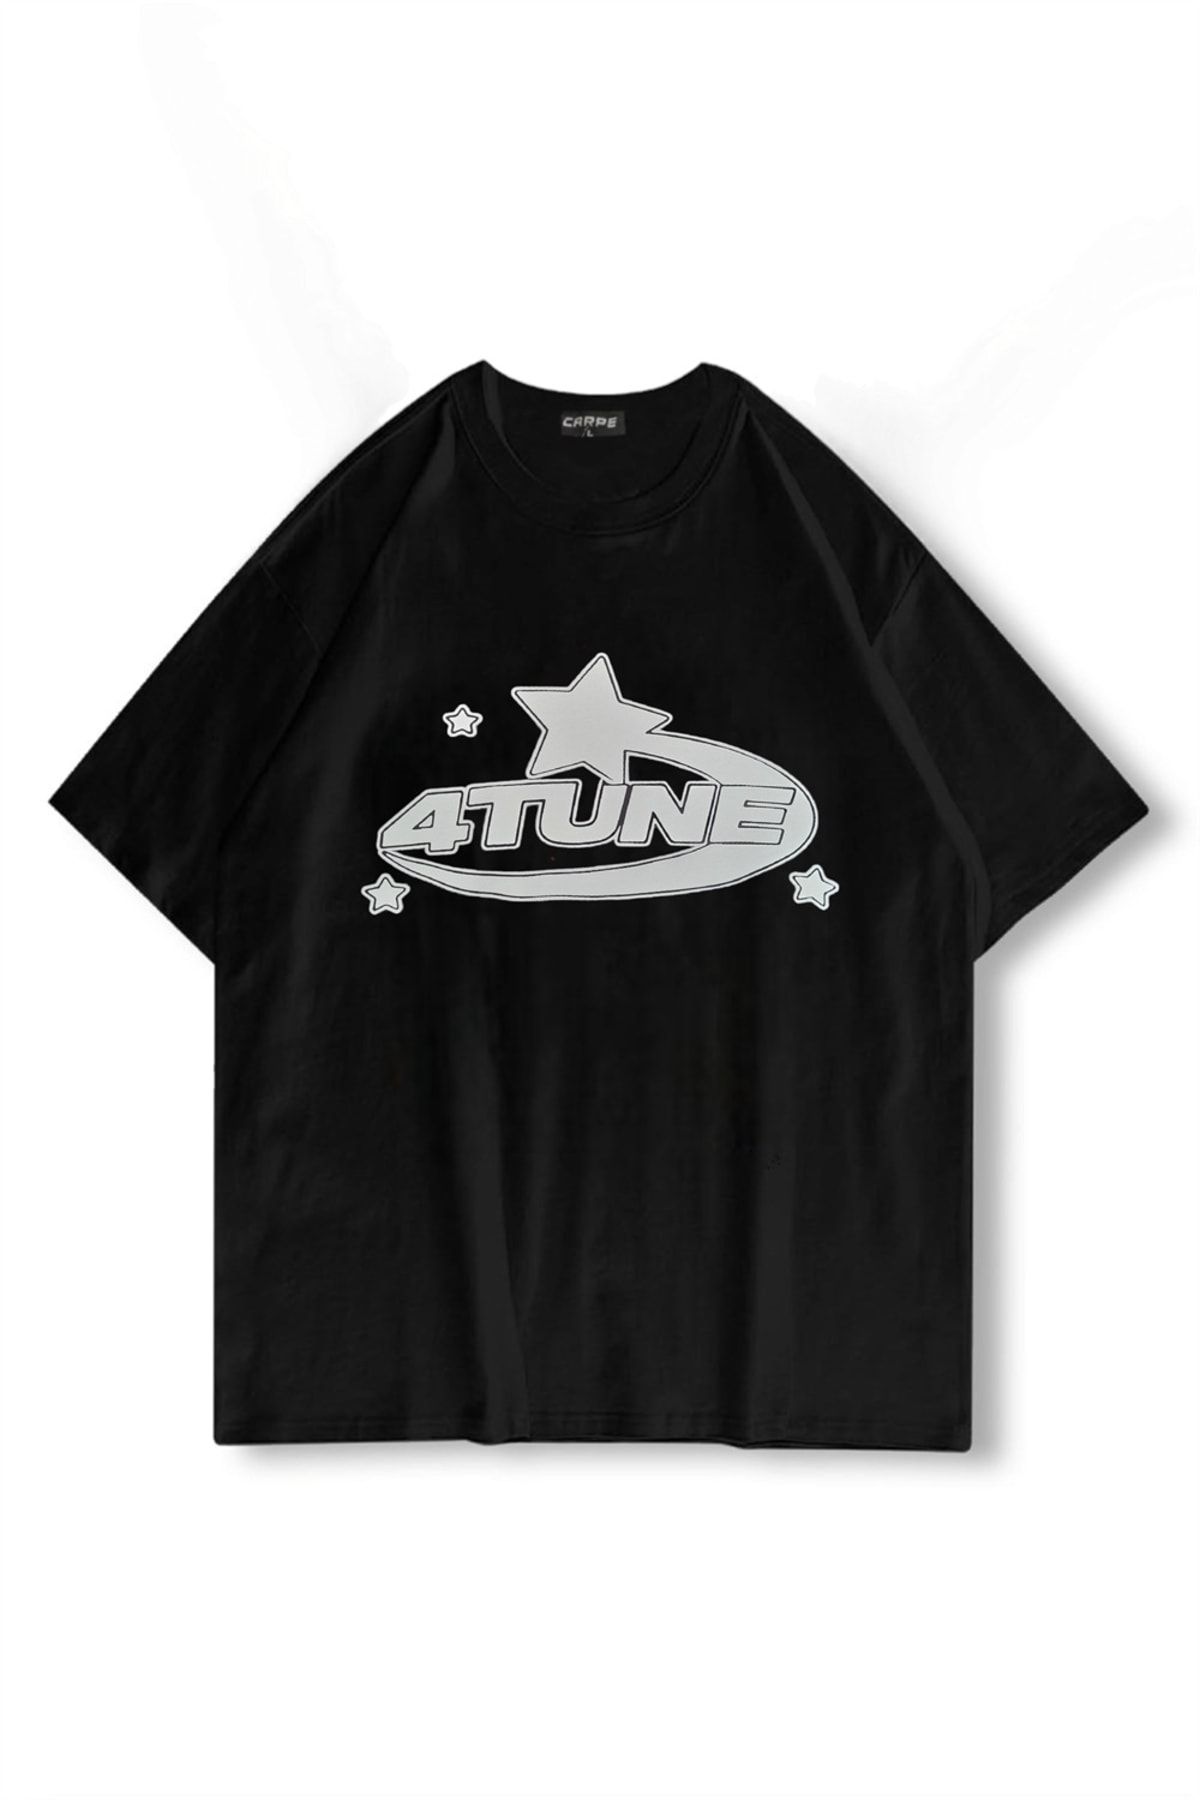 Carpe 4 Tune Star Oversize T-shirt